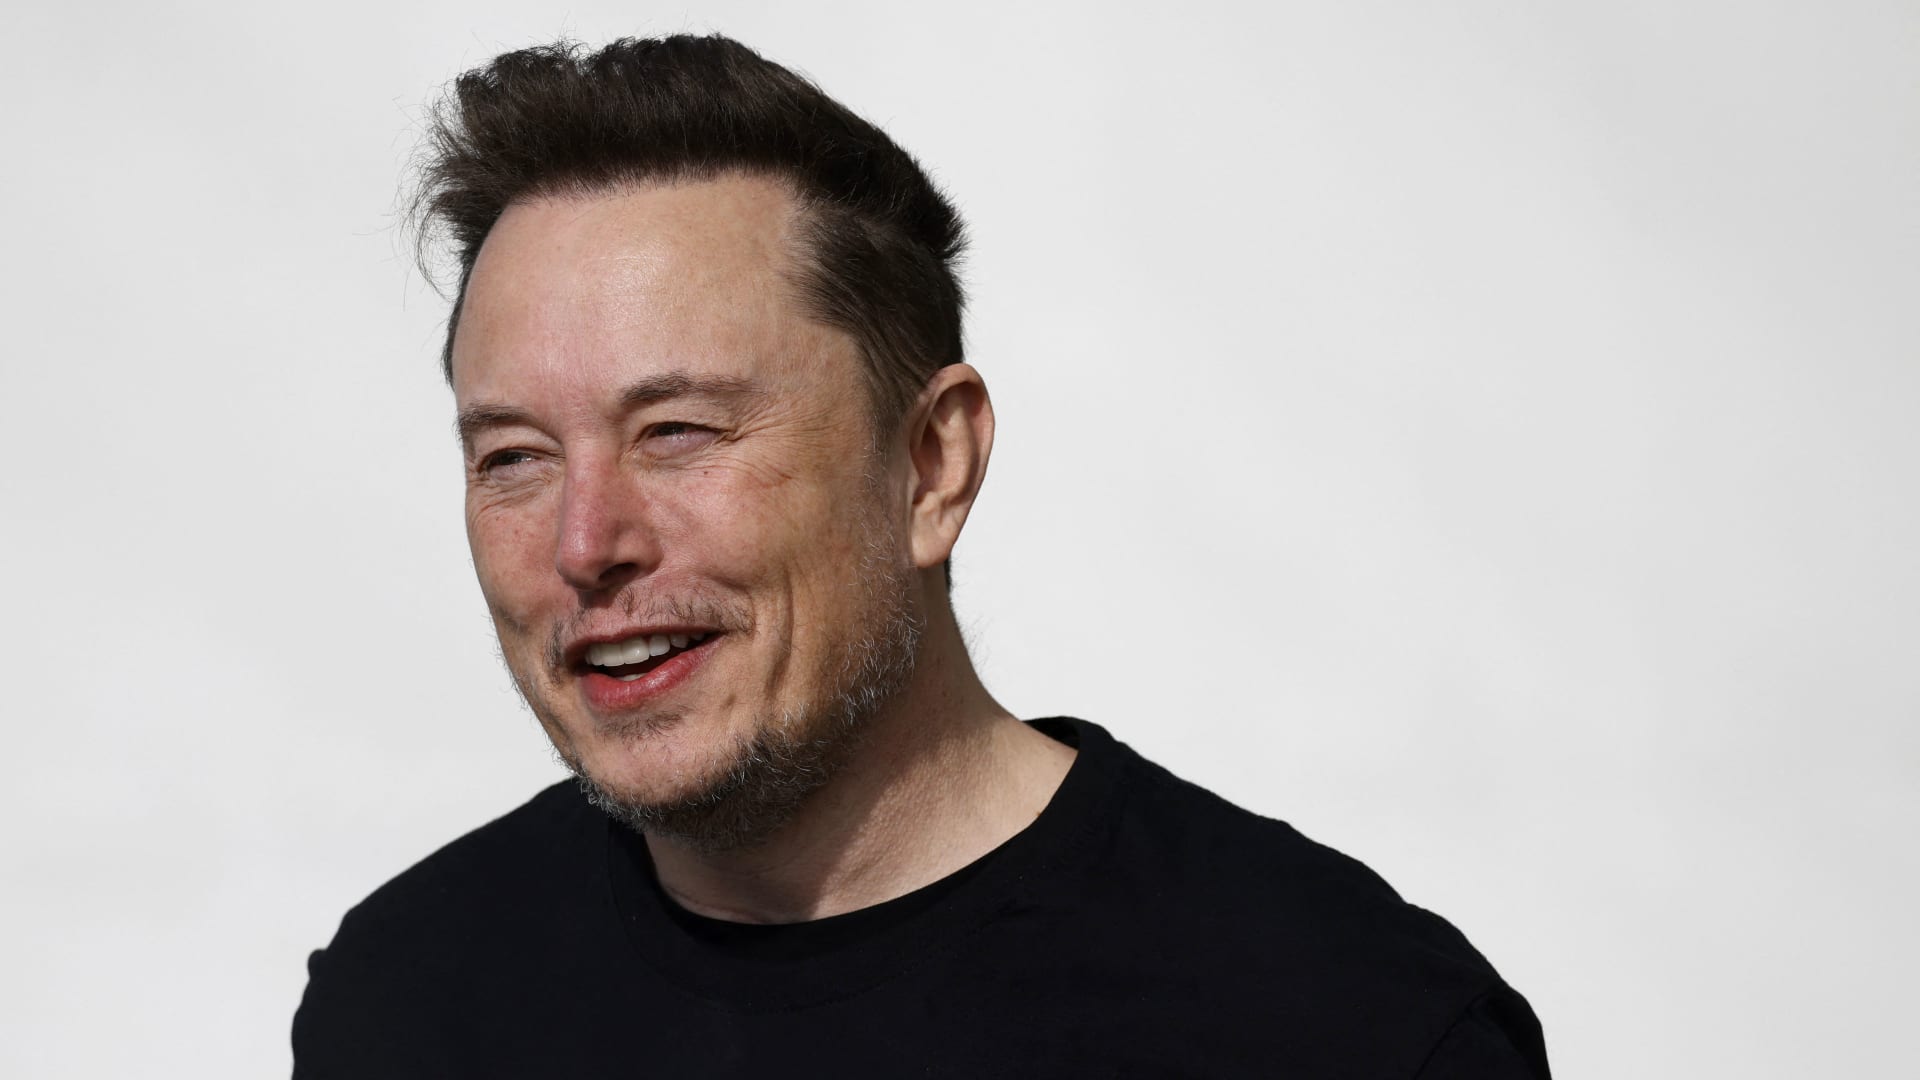 Elon Musk suggests his prescription ketamine use is good for investors